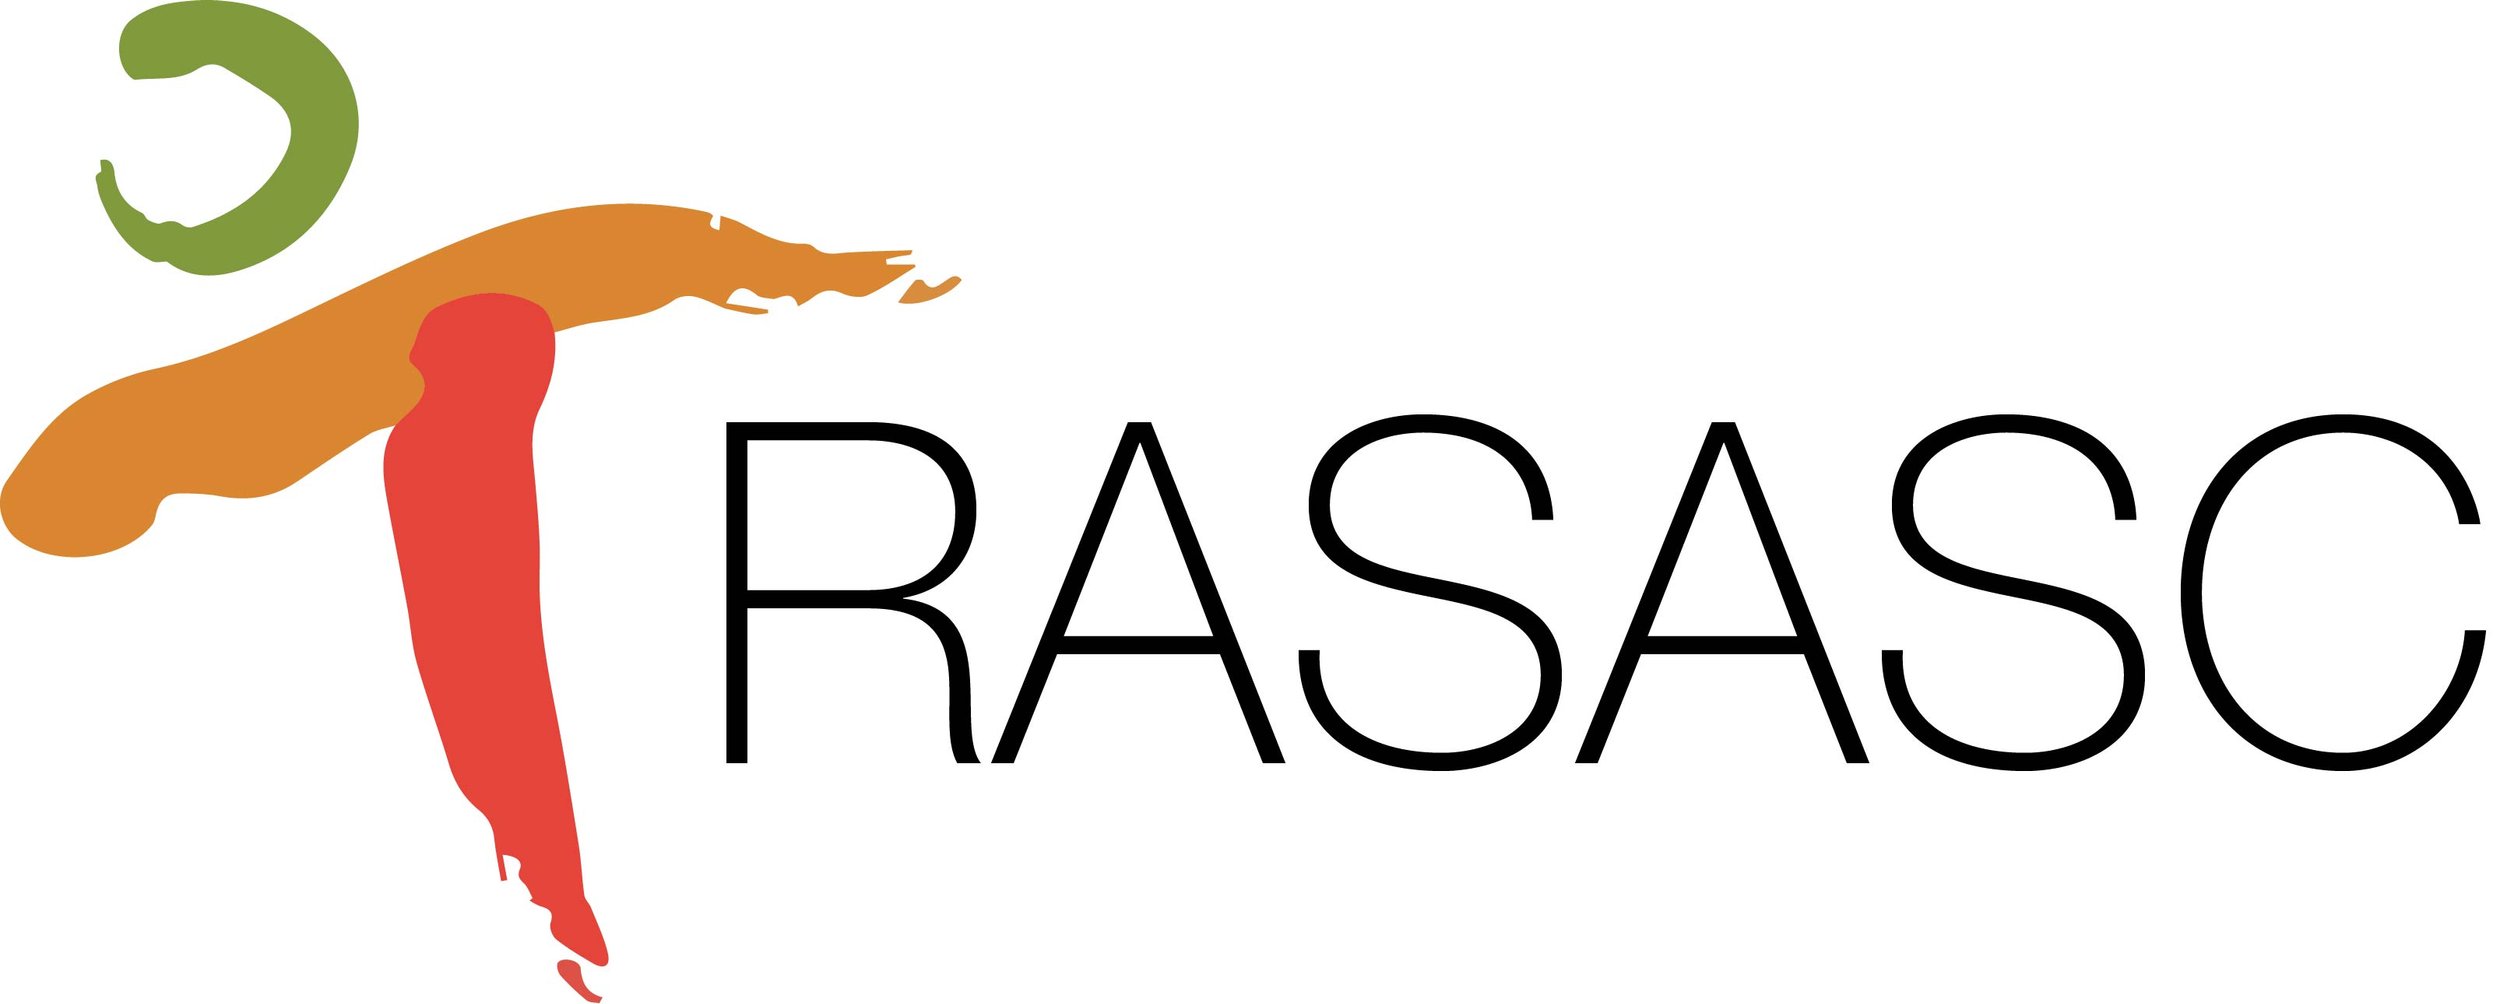 RASASC Logo Symbol and Text.jpg